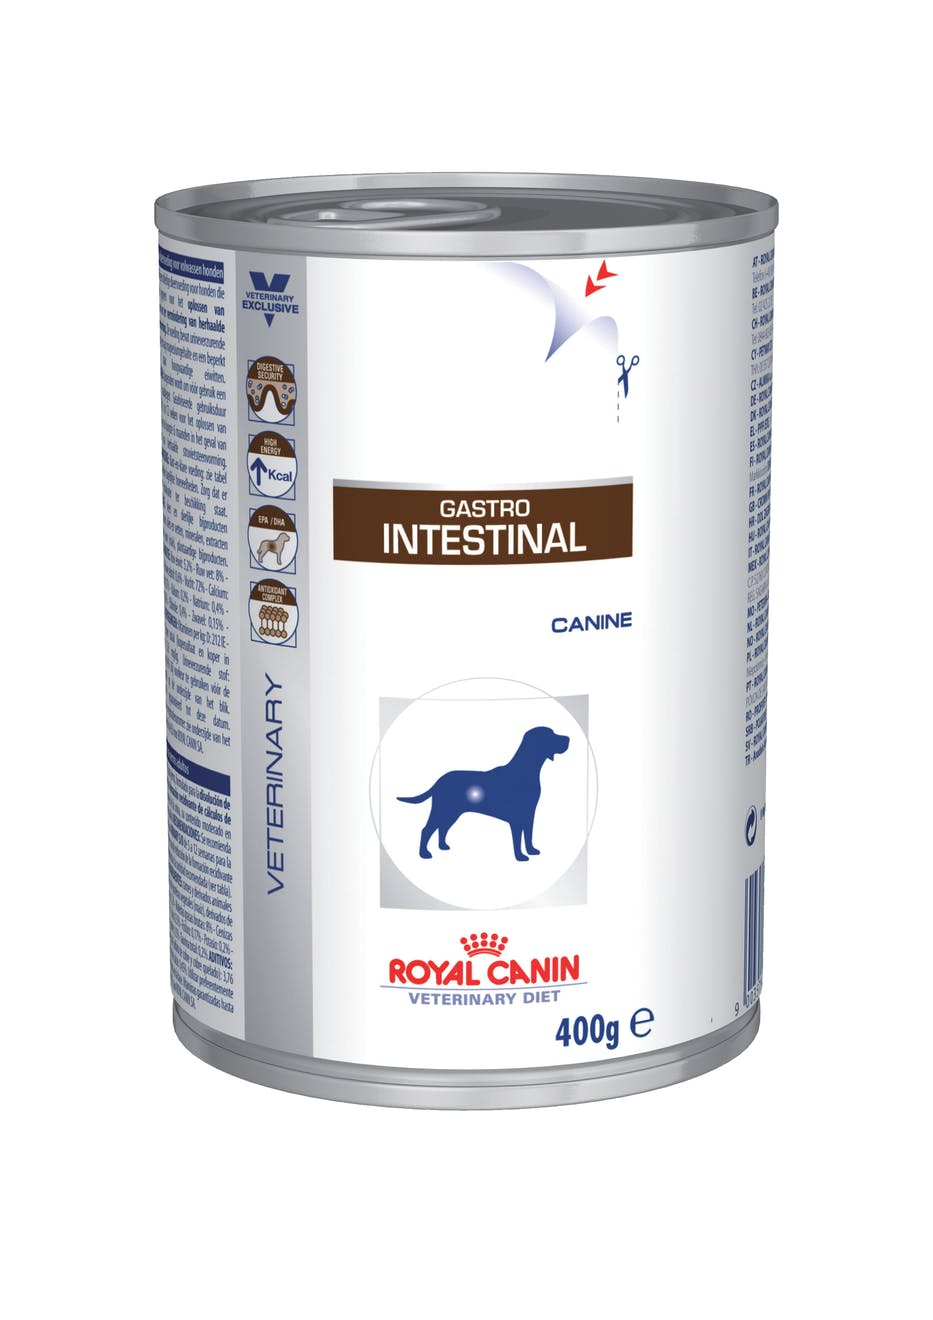 Gastro Intestinal wet | Royal Canin